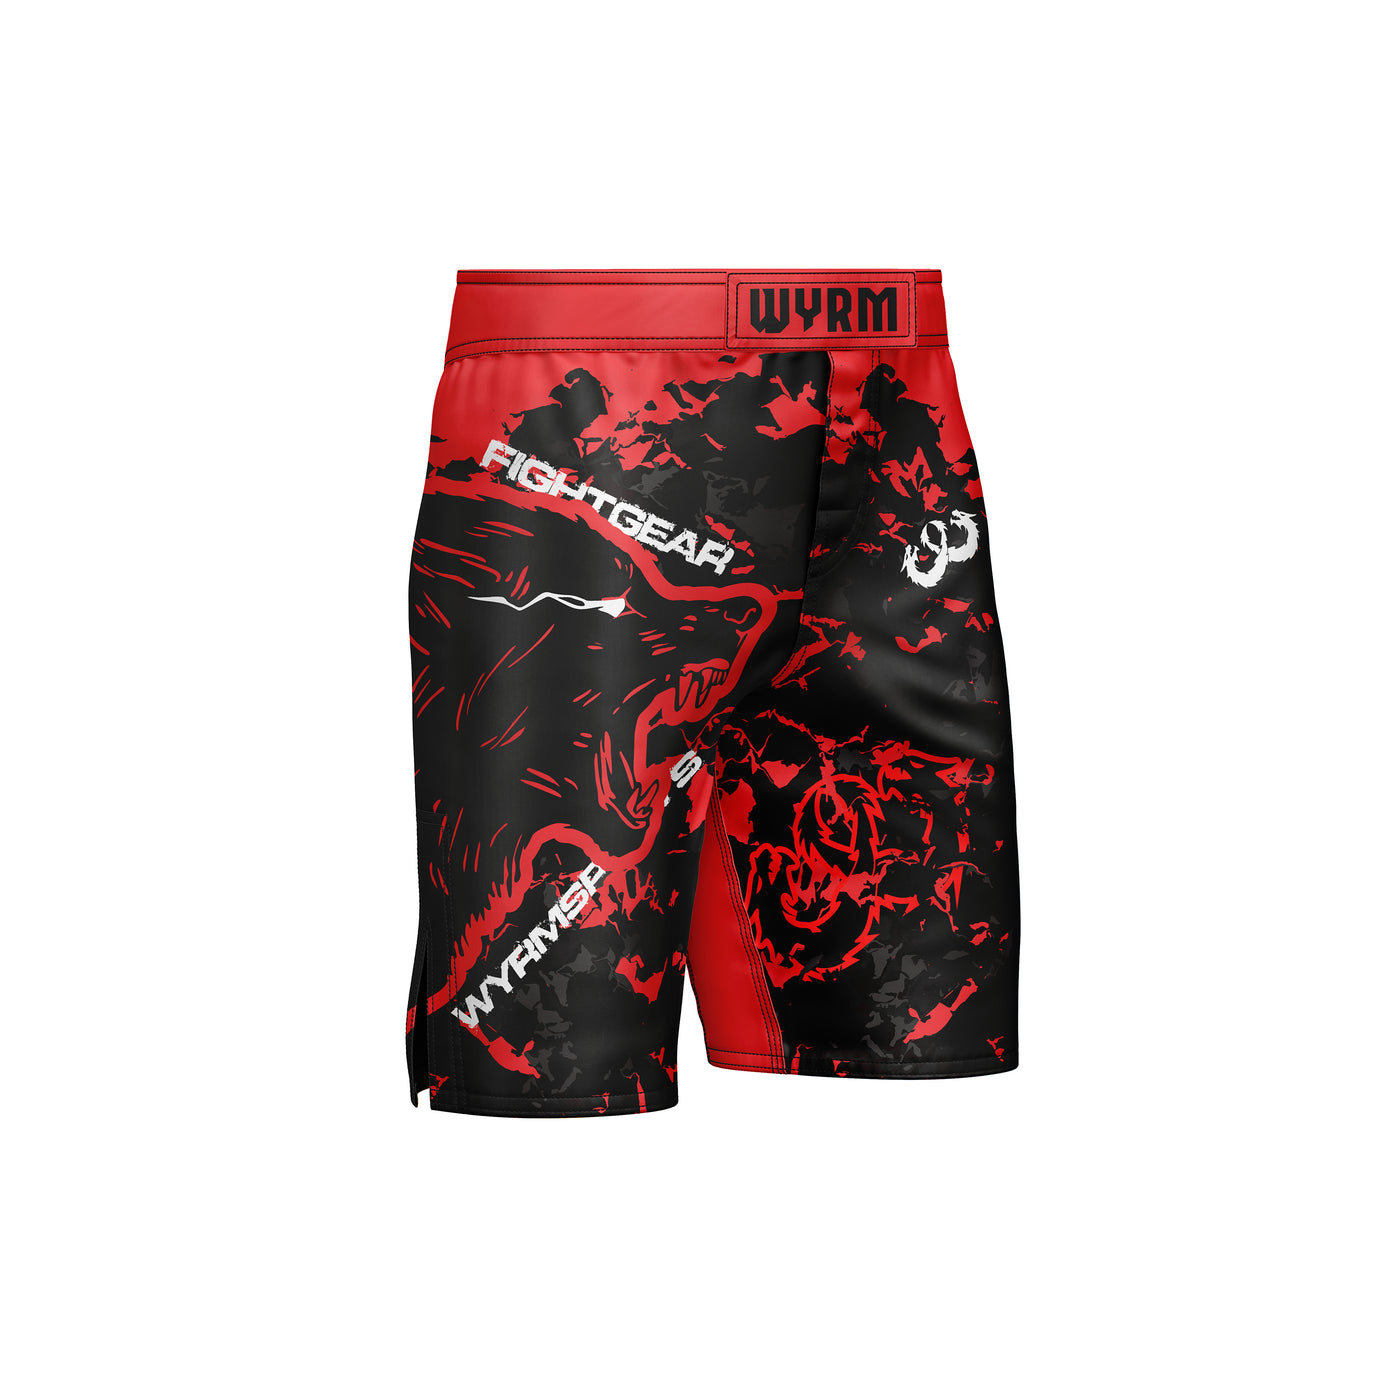 Bite Fighter MMA Shorts